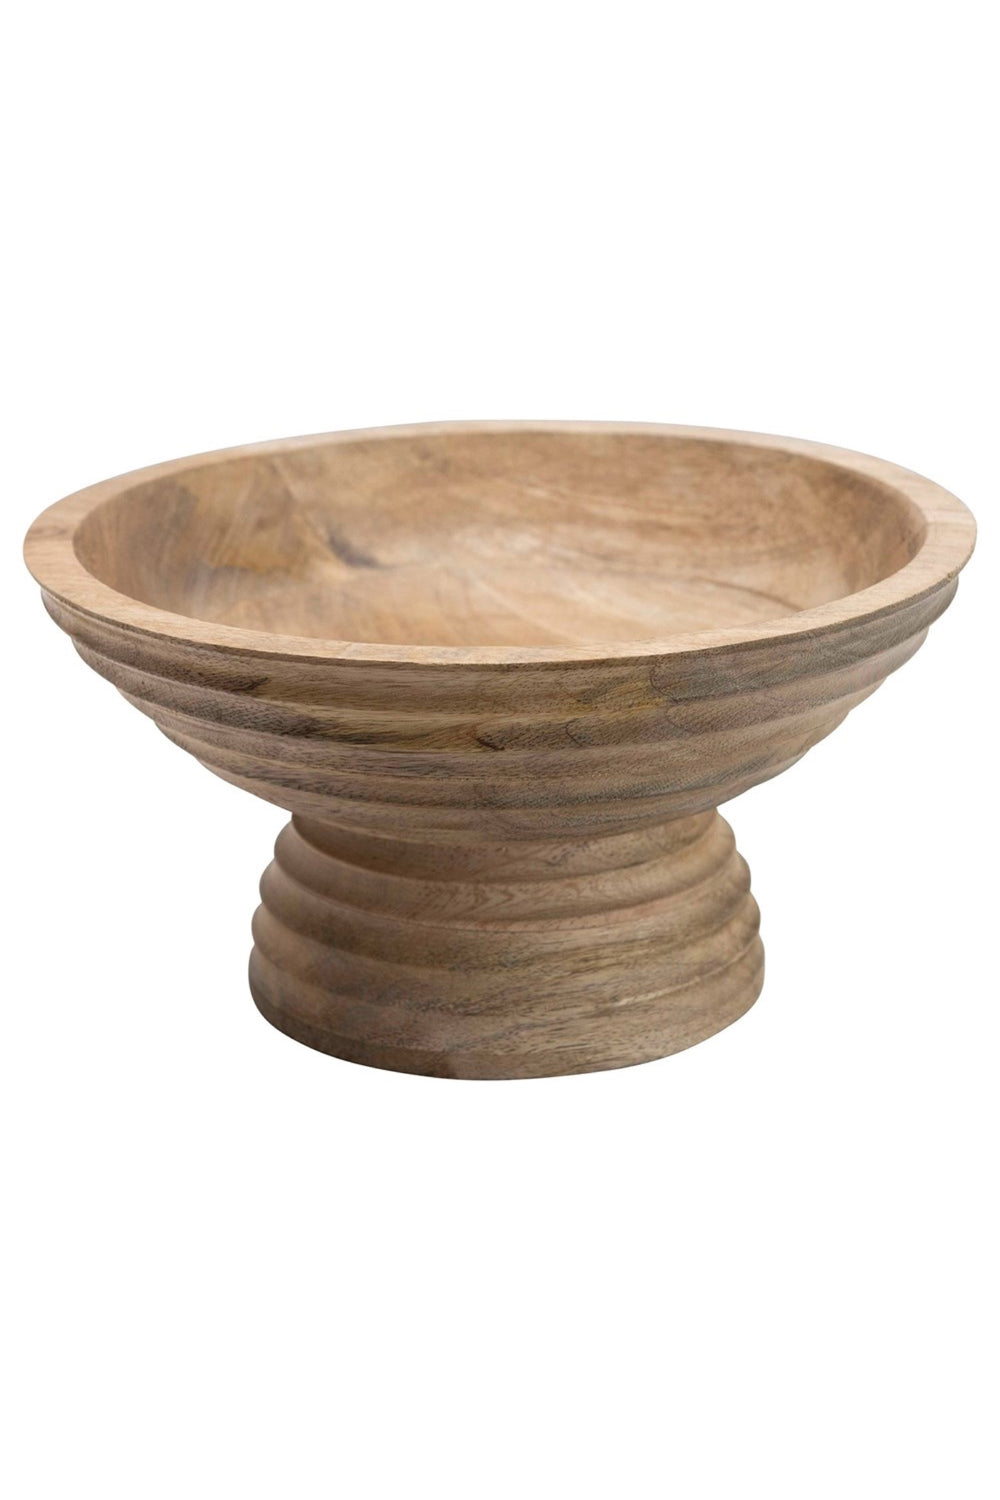 Mango Wood Pedestal Bowl